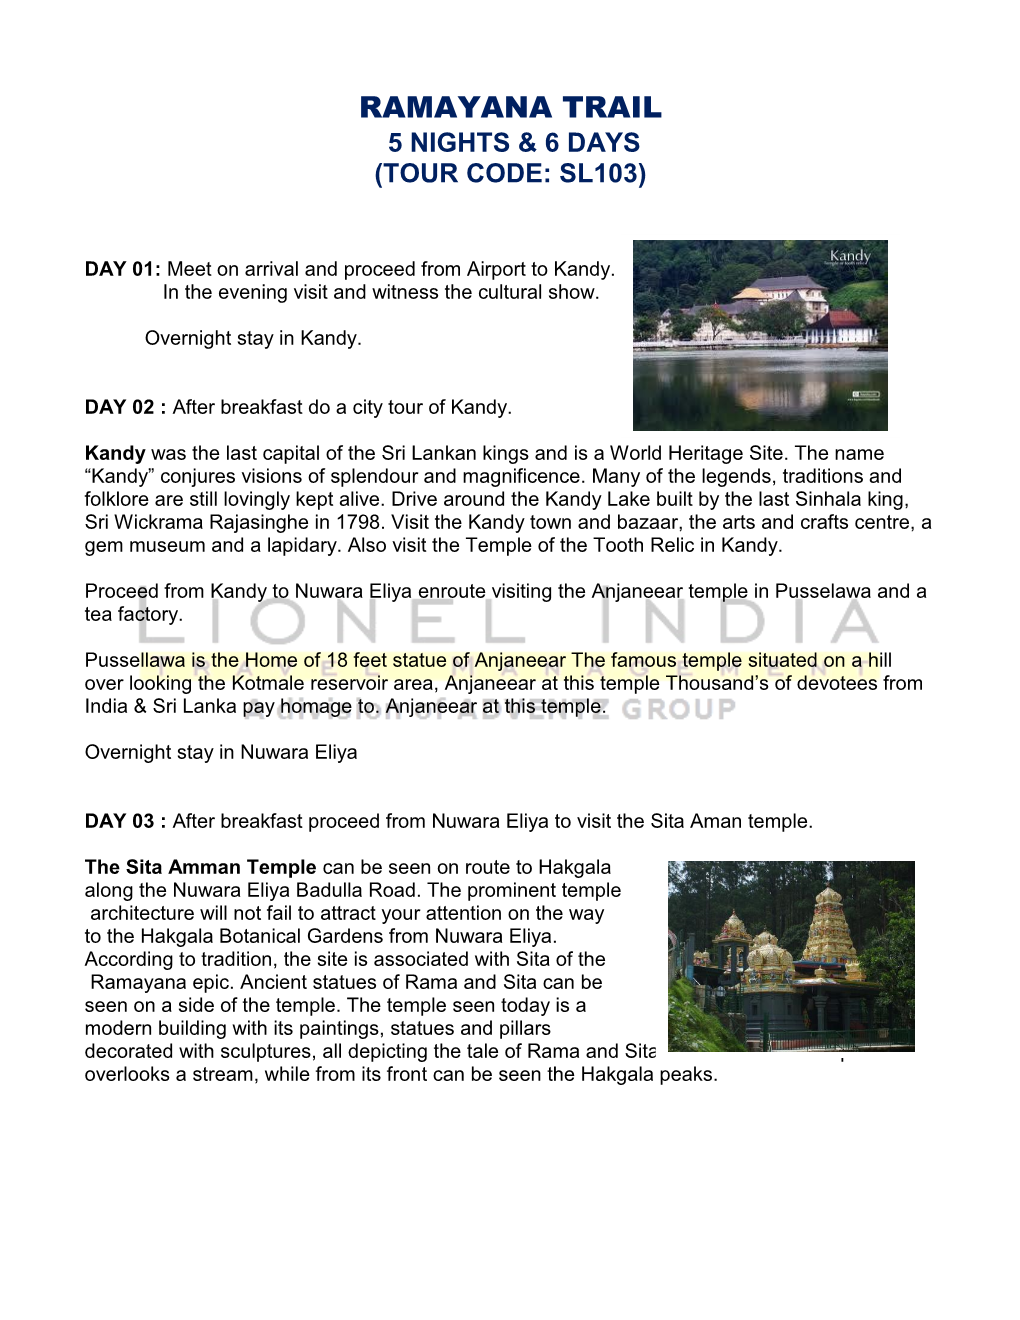 Ramayana Trail 5 Nights & 6 Days (Tour Code: Sl103)